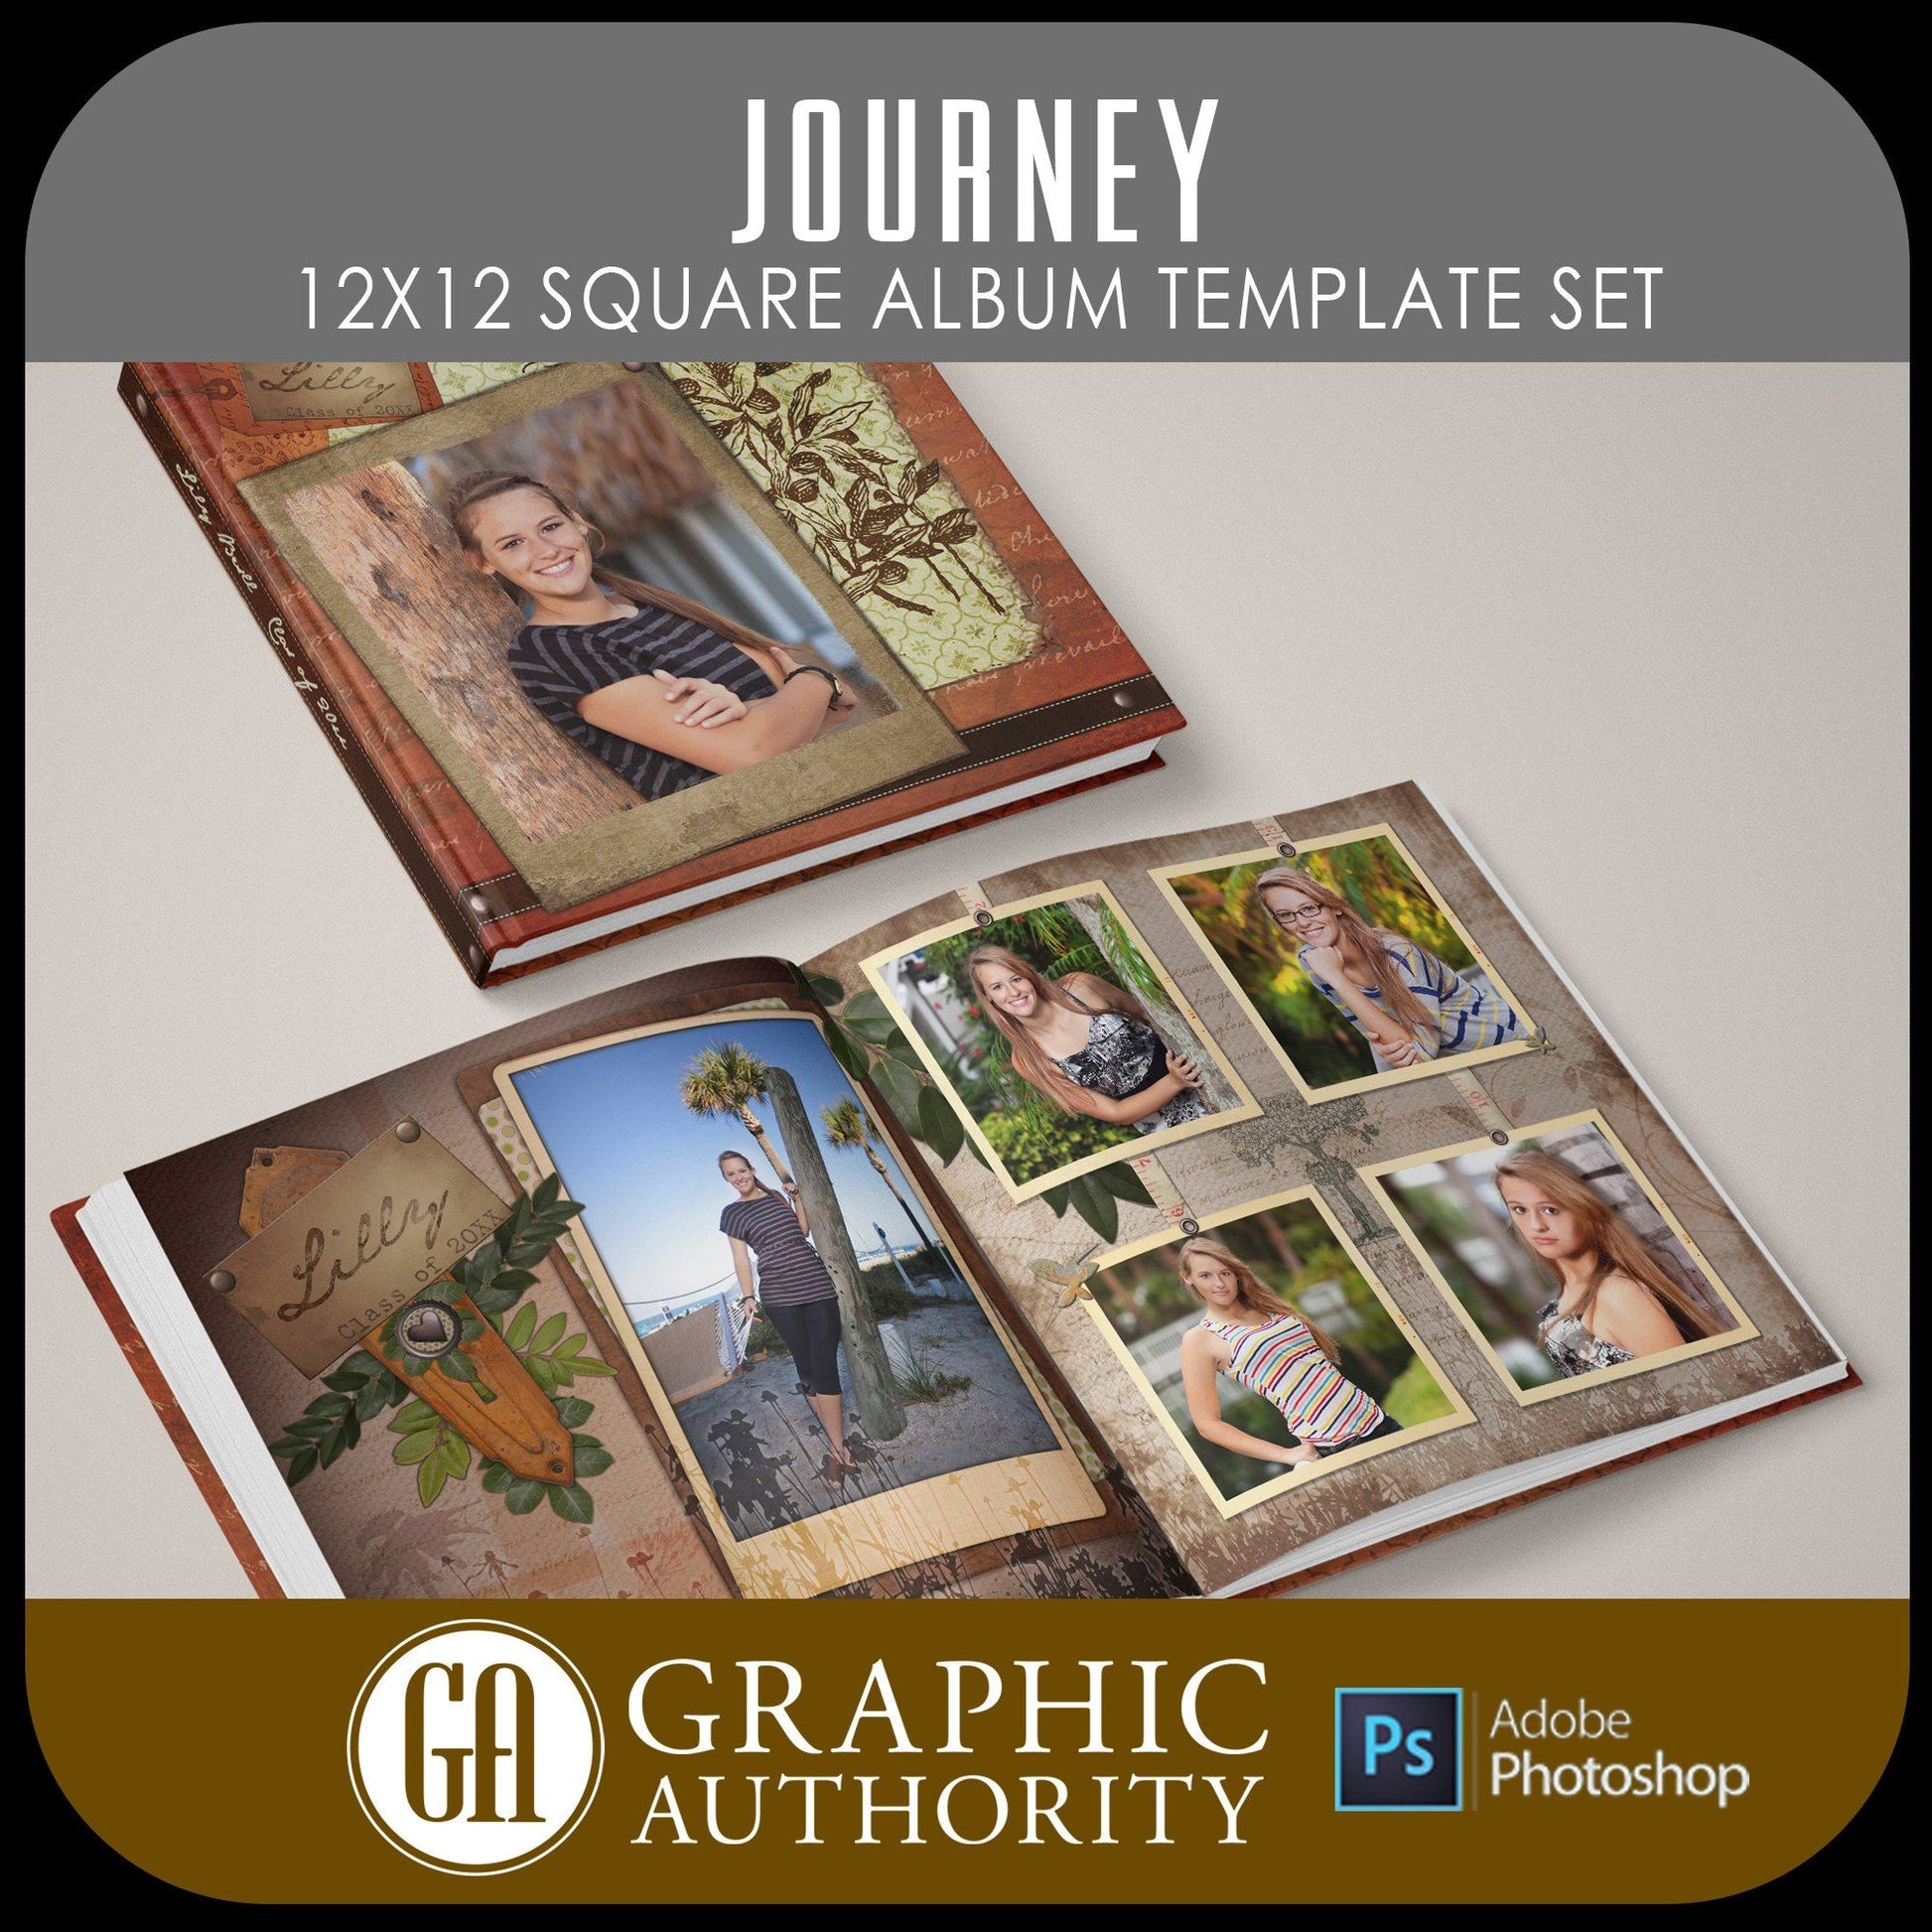 Journey - 12x24 - Album Spreads-Photoshop Template - Graphic Authority